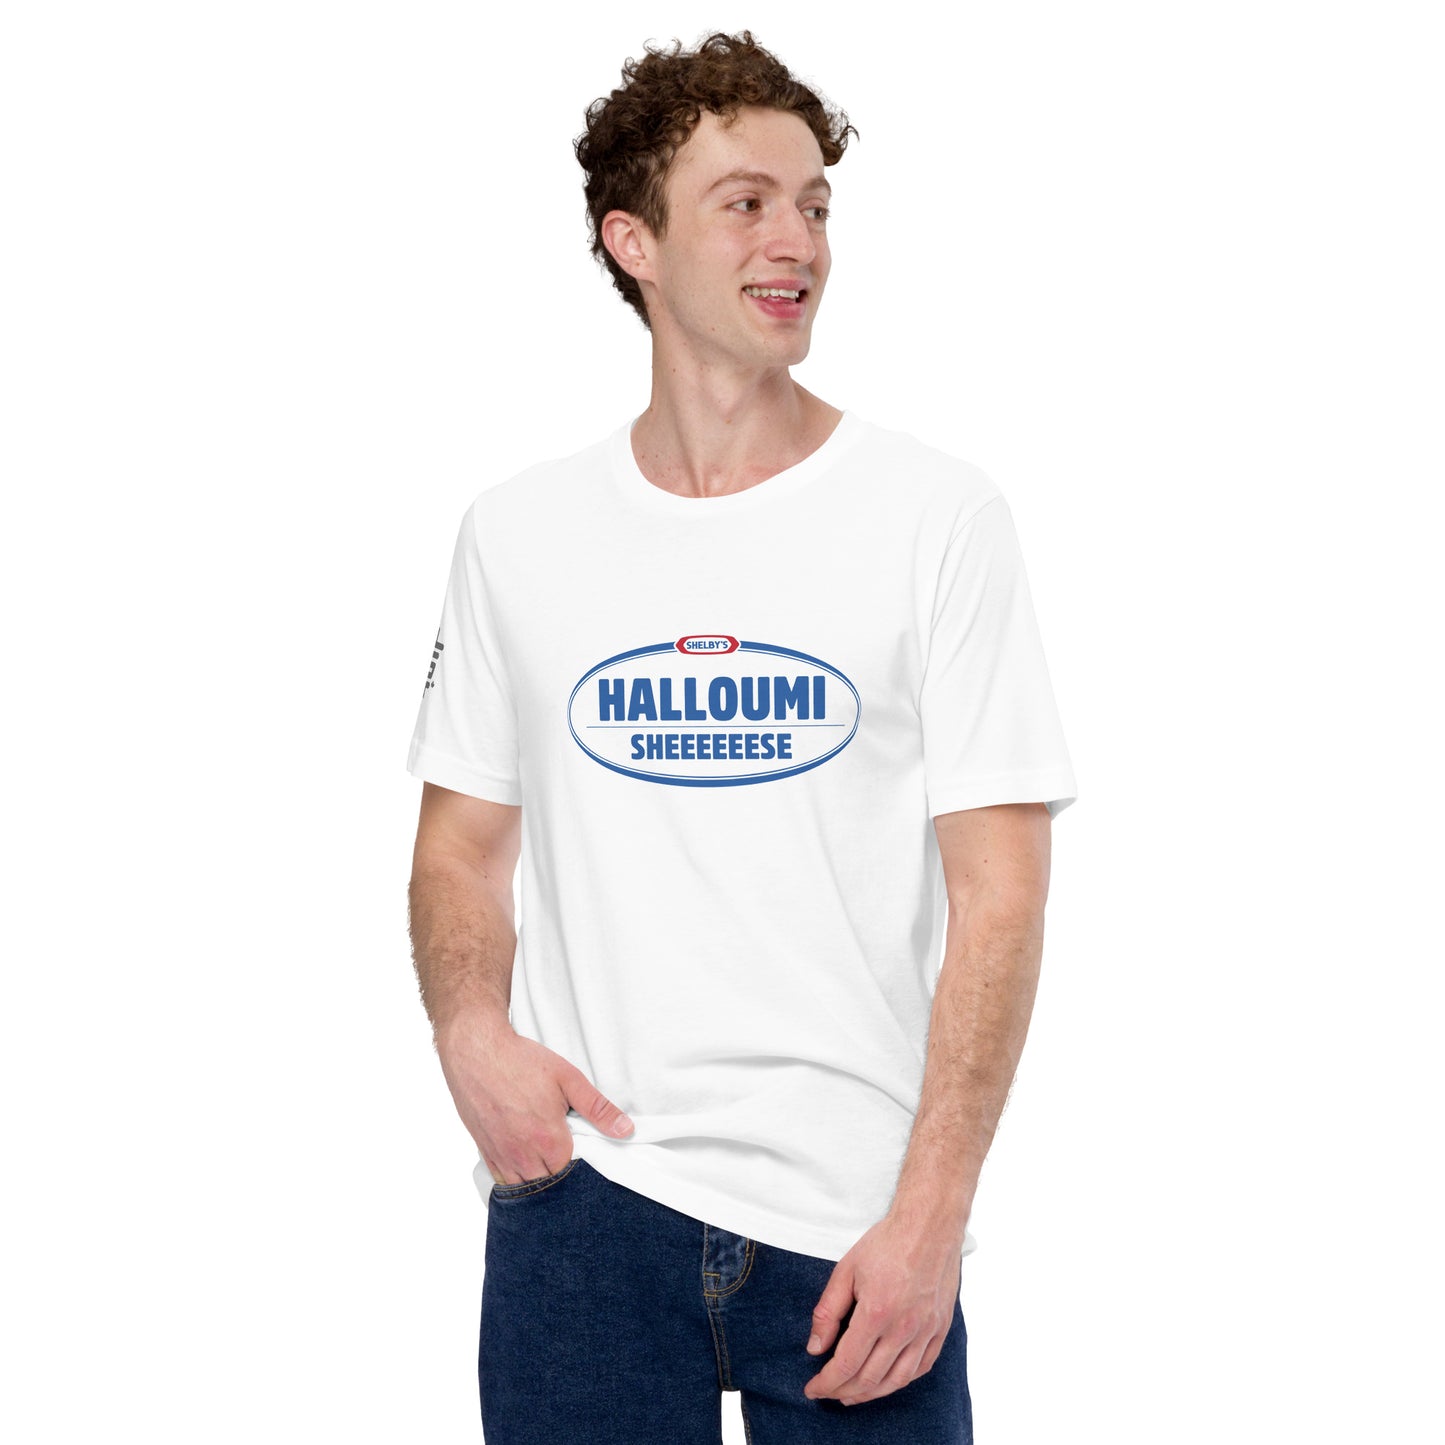 Halloumi Sheese - T-shirt